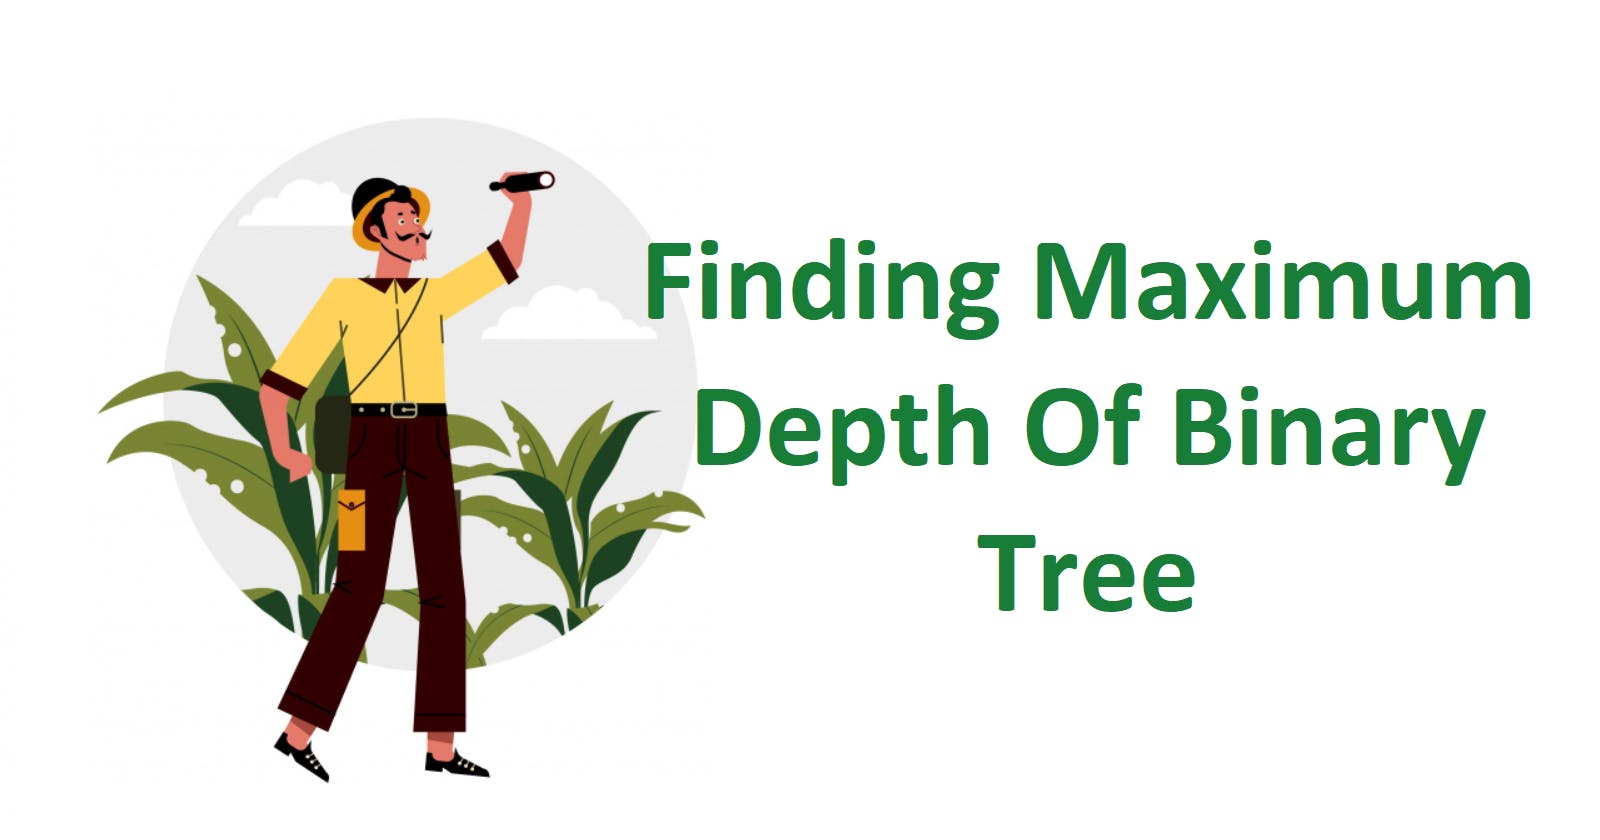 Finding Maximum Depth of Binary Tree